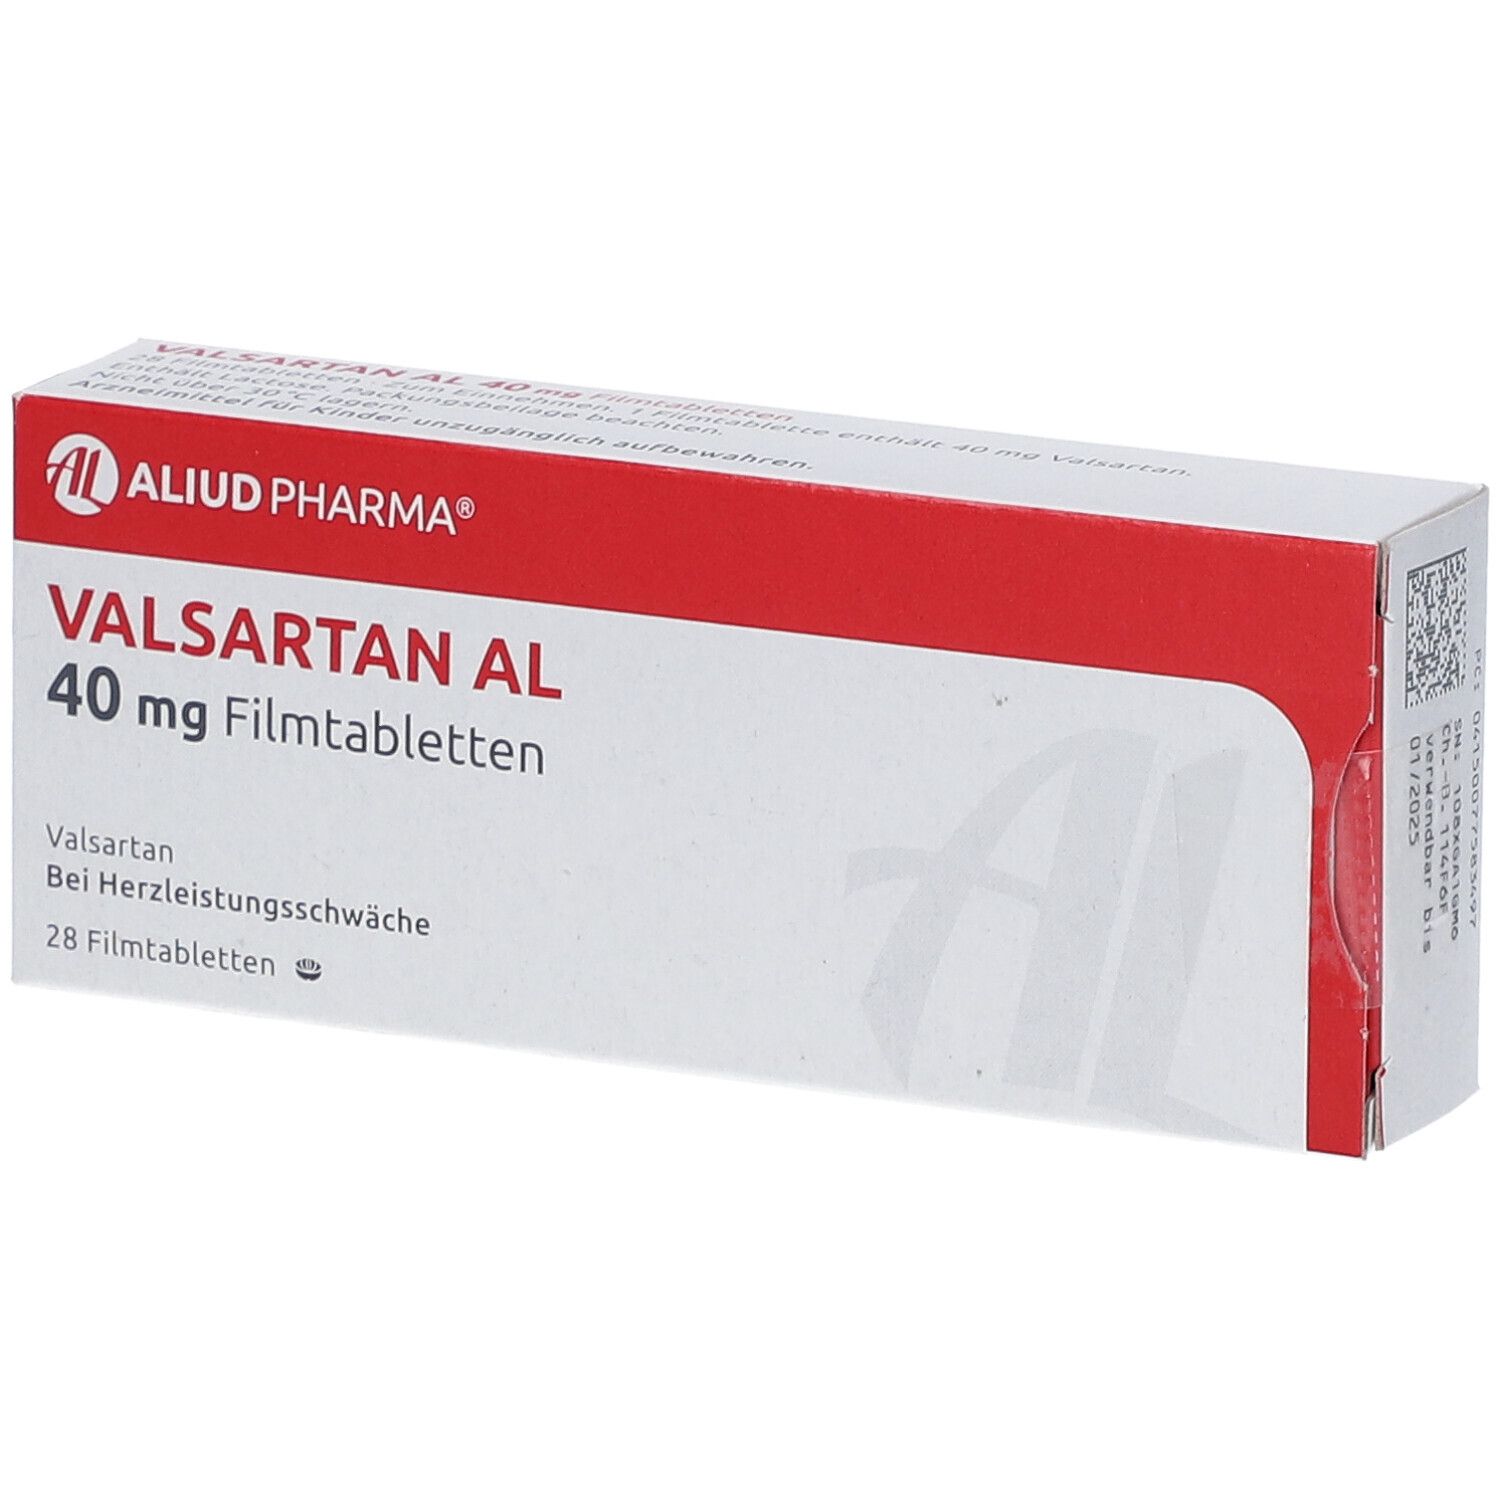 Valsartan AL 40 mg